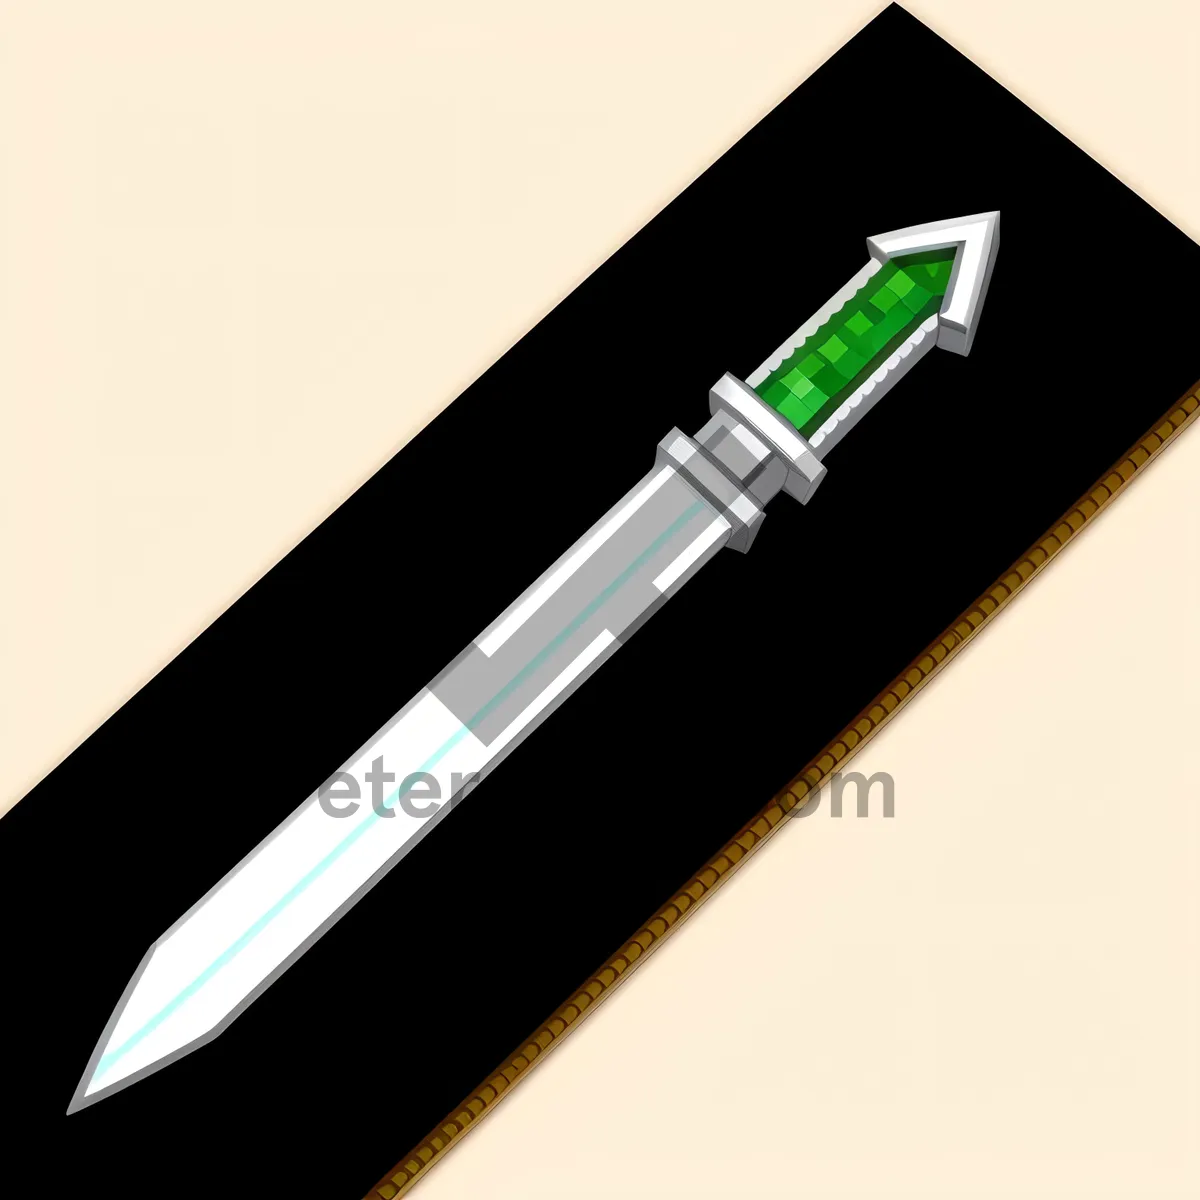 Picture of Sharp Office Tool: Knife-Like Letter Opener